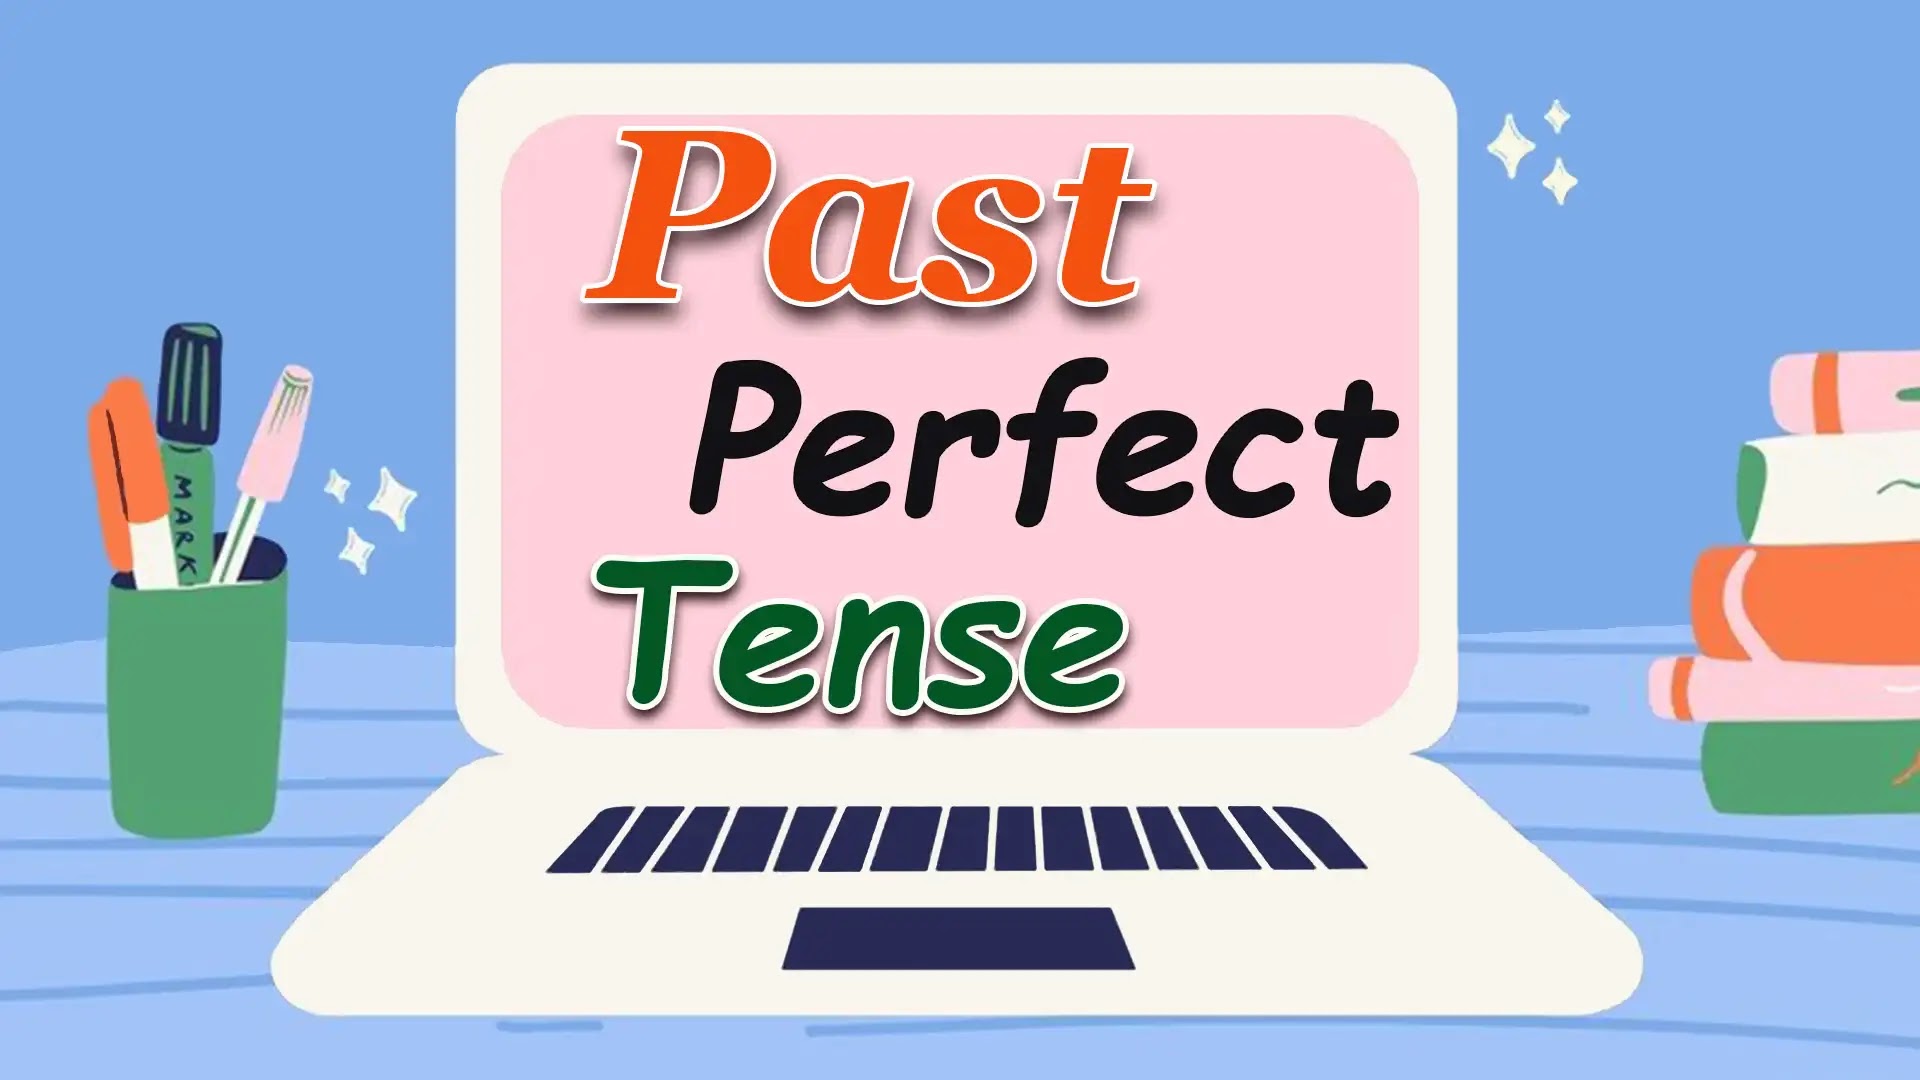 Past perfect tense